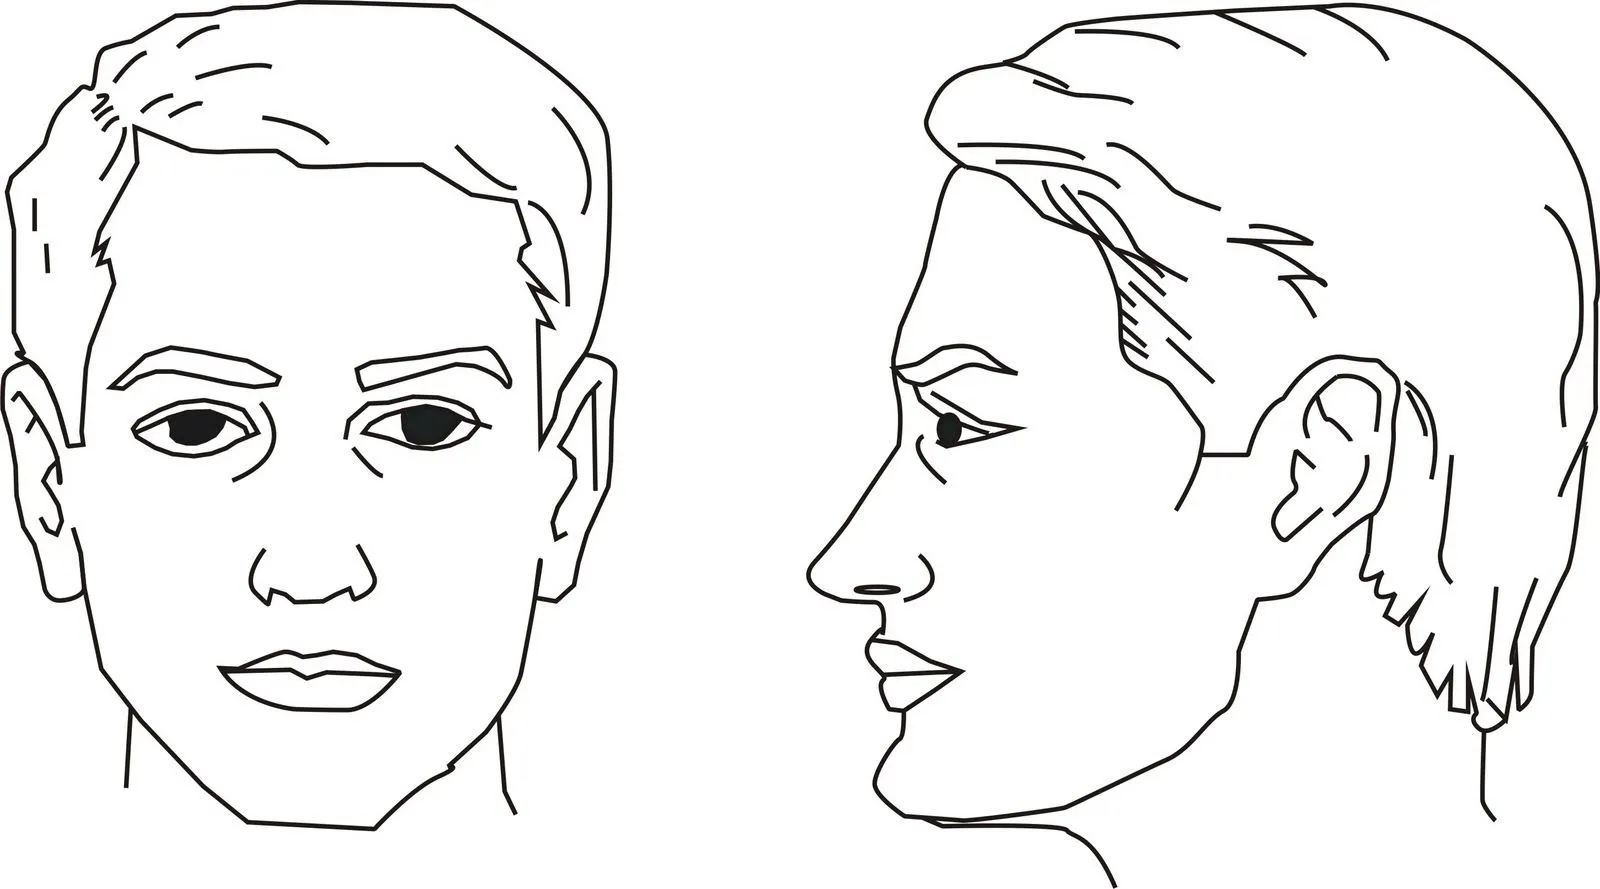 Dibujos de rostros de hombres - Imagui